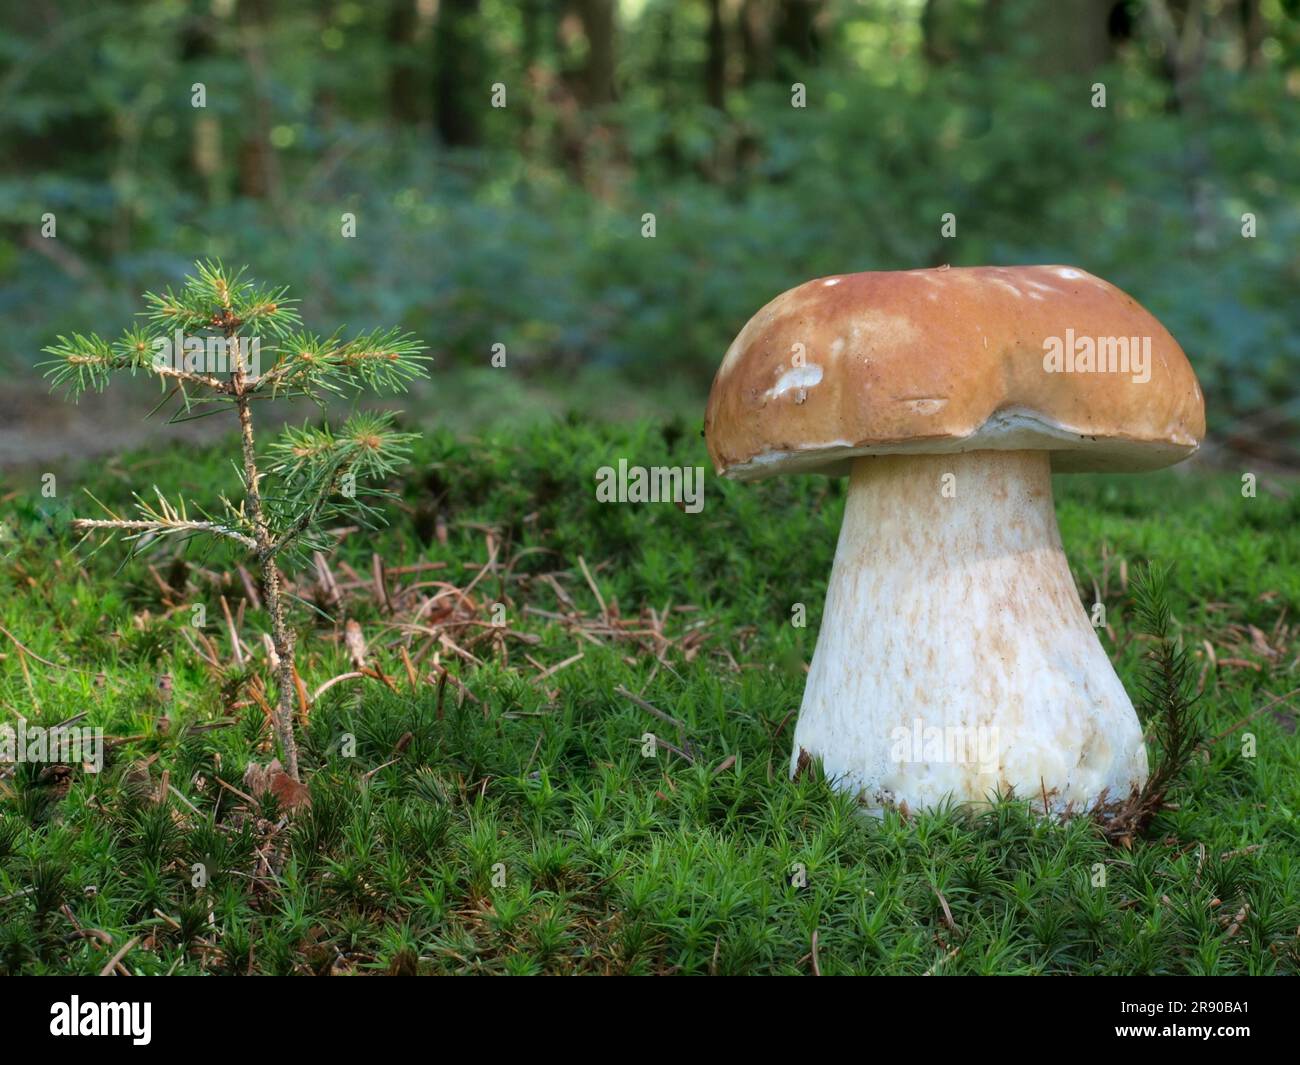 Porcini mushroom Stock Photo